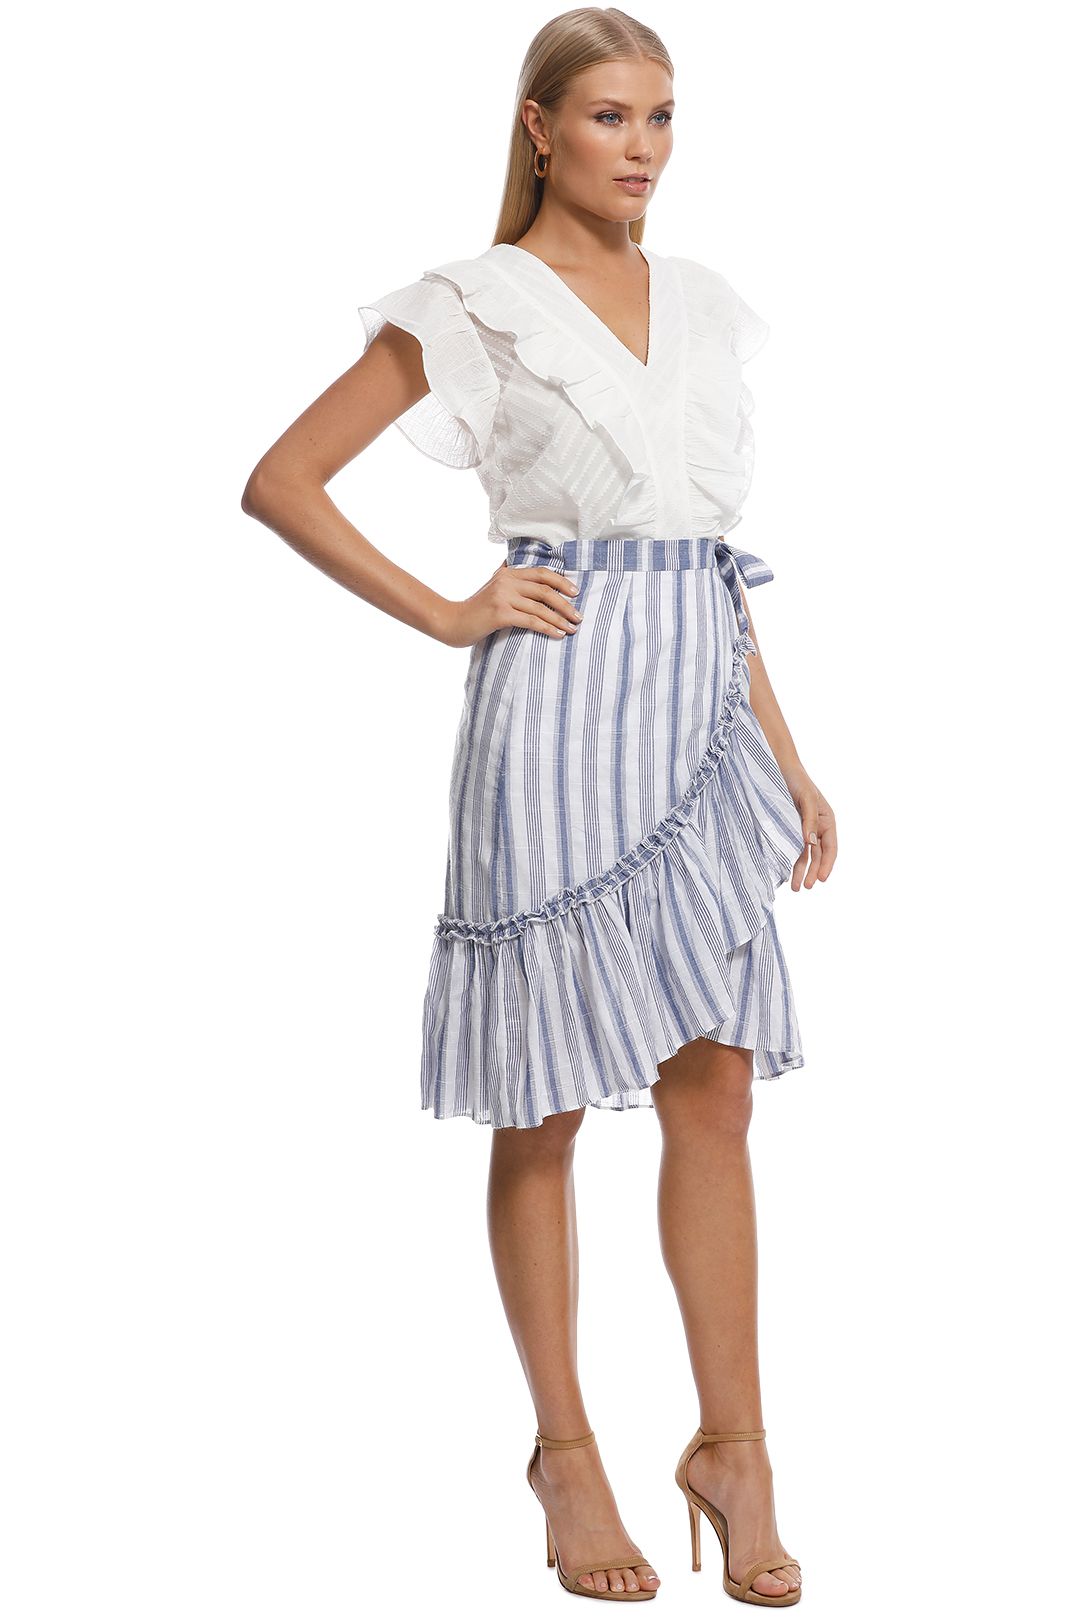 Suboo - Wrap Midi Skirt - Blue White Stripes - Side